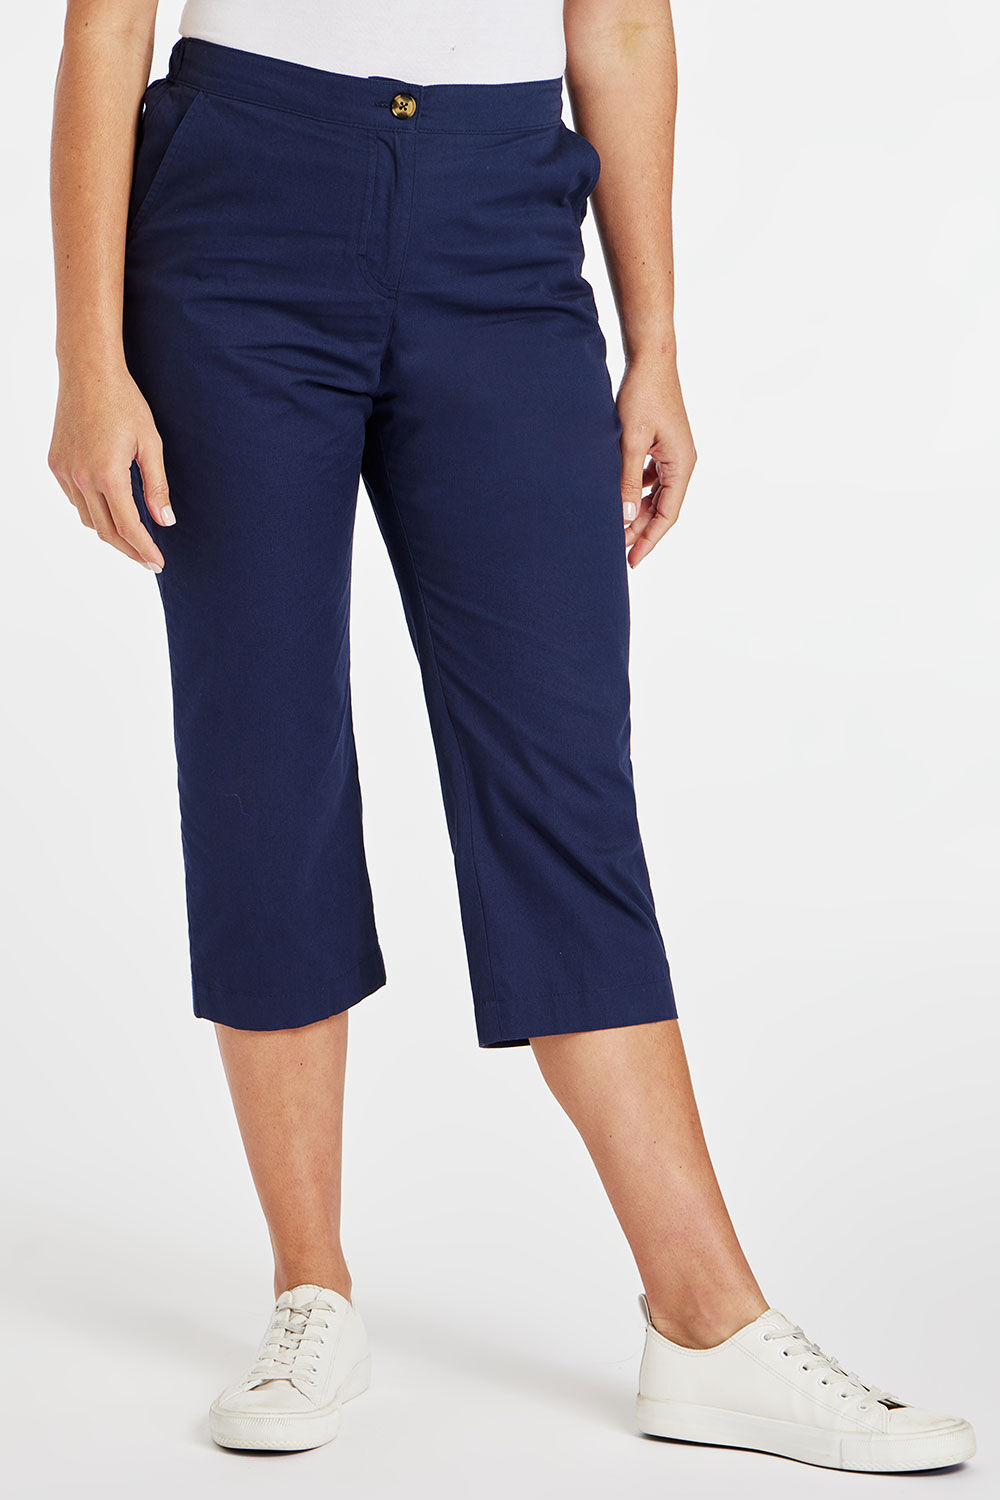 Womens Casual Plain Elasticated Plus Size 3/4 Cropped Pants Capri Trousers  | eBay